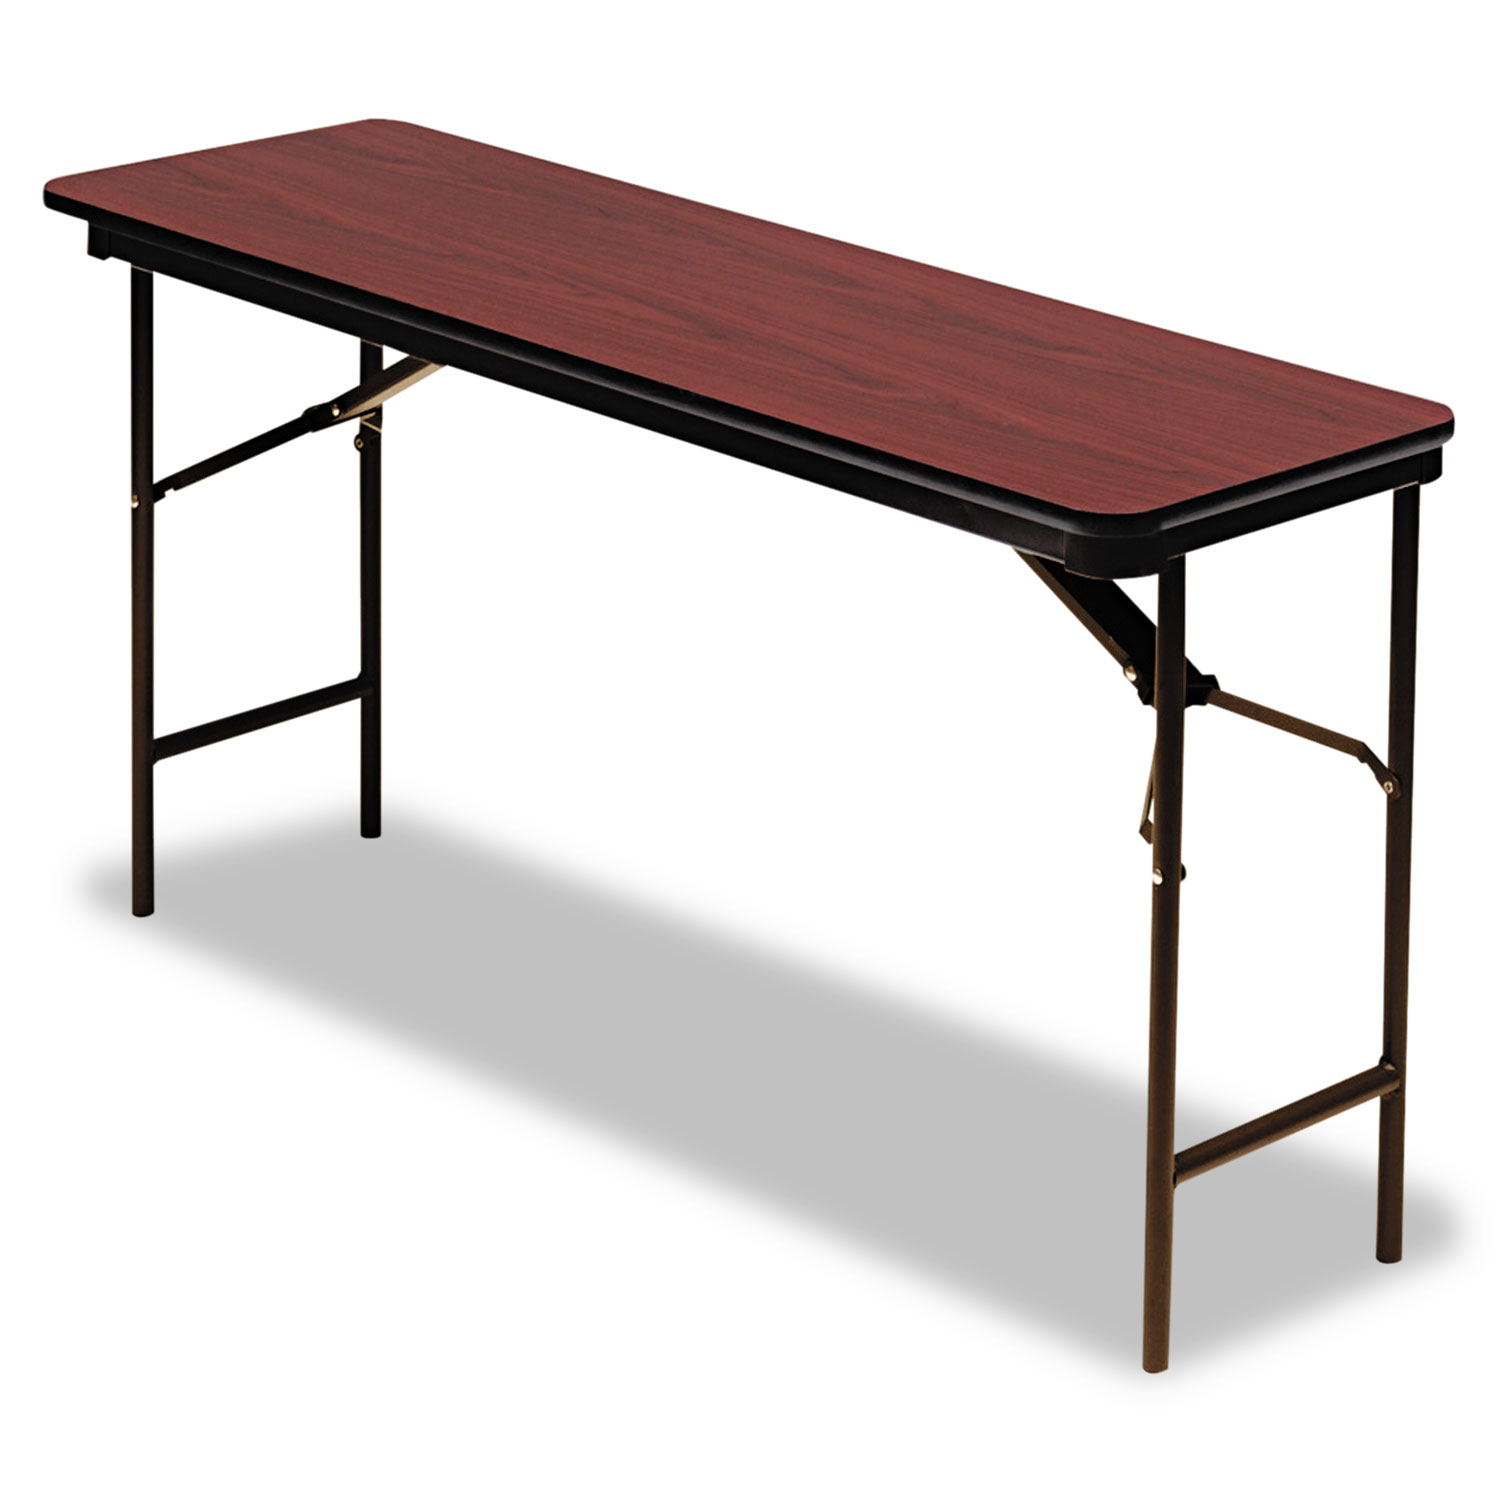  Iceberg 55284 Premium Wood Laminate Folding Table, Rectangular, 72w x 18d x 29h, Mahogany (ICE55284) 